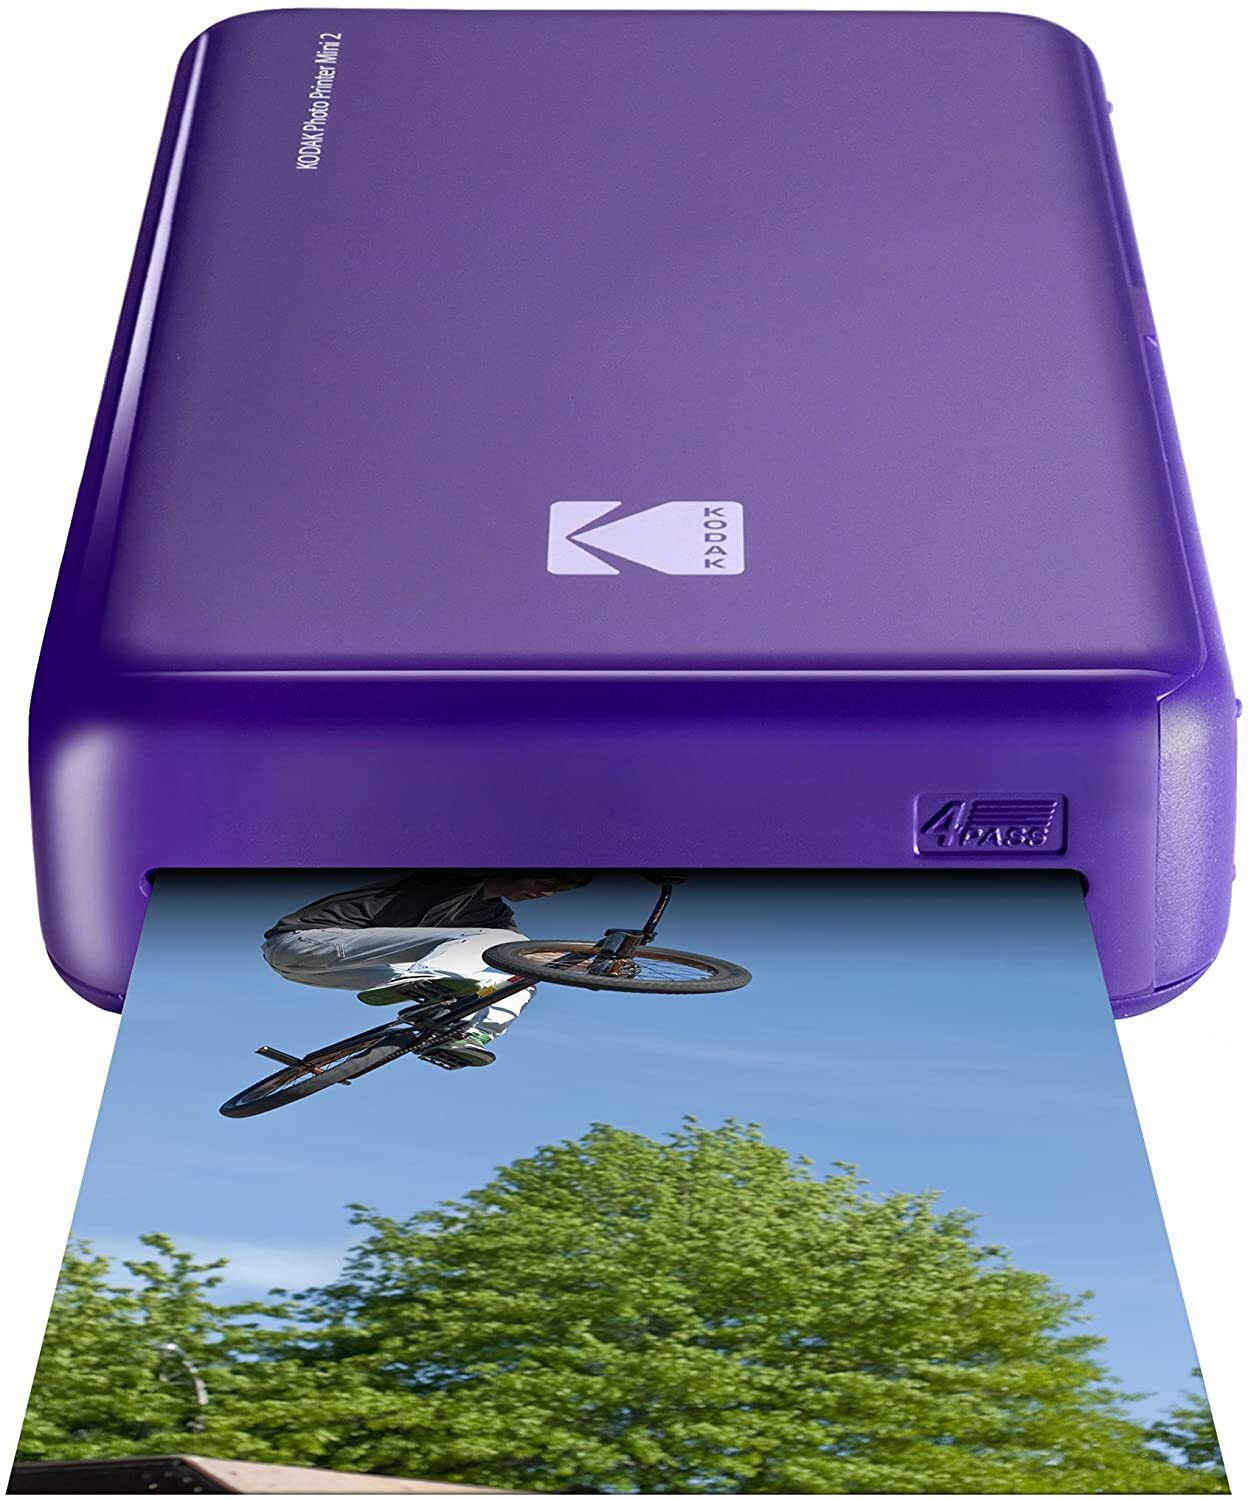 Withered Peck absolutte Buy Kodak Mini 2 Instant Photo Printer - Purple online Worldwide - Tejar.com